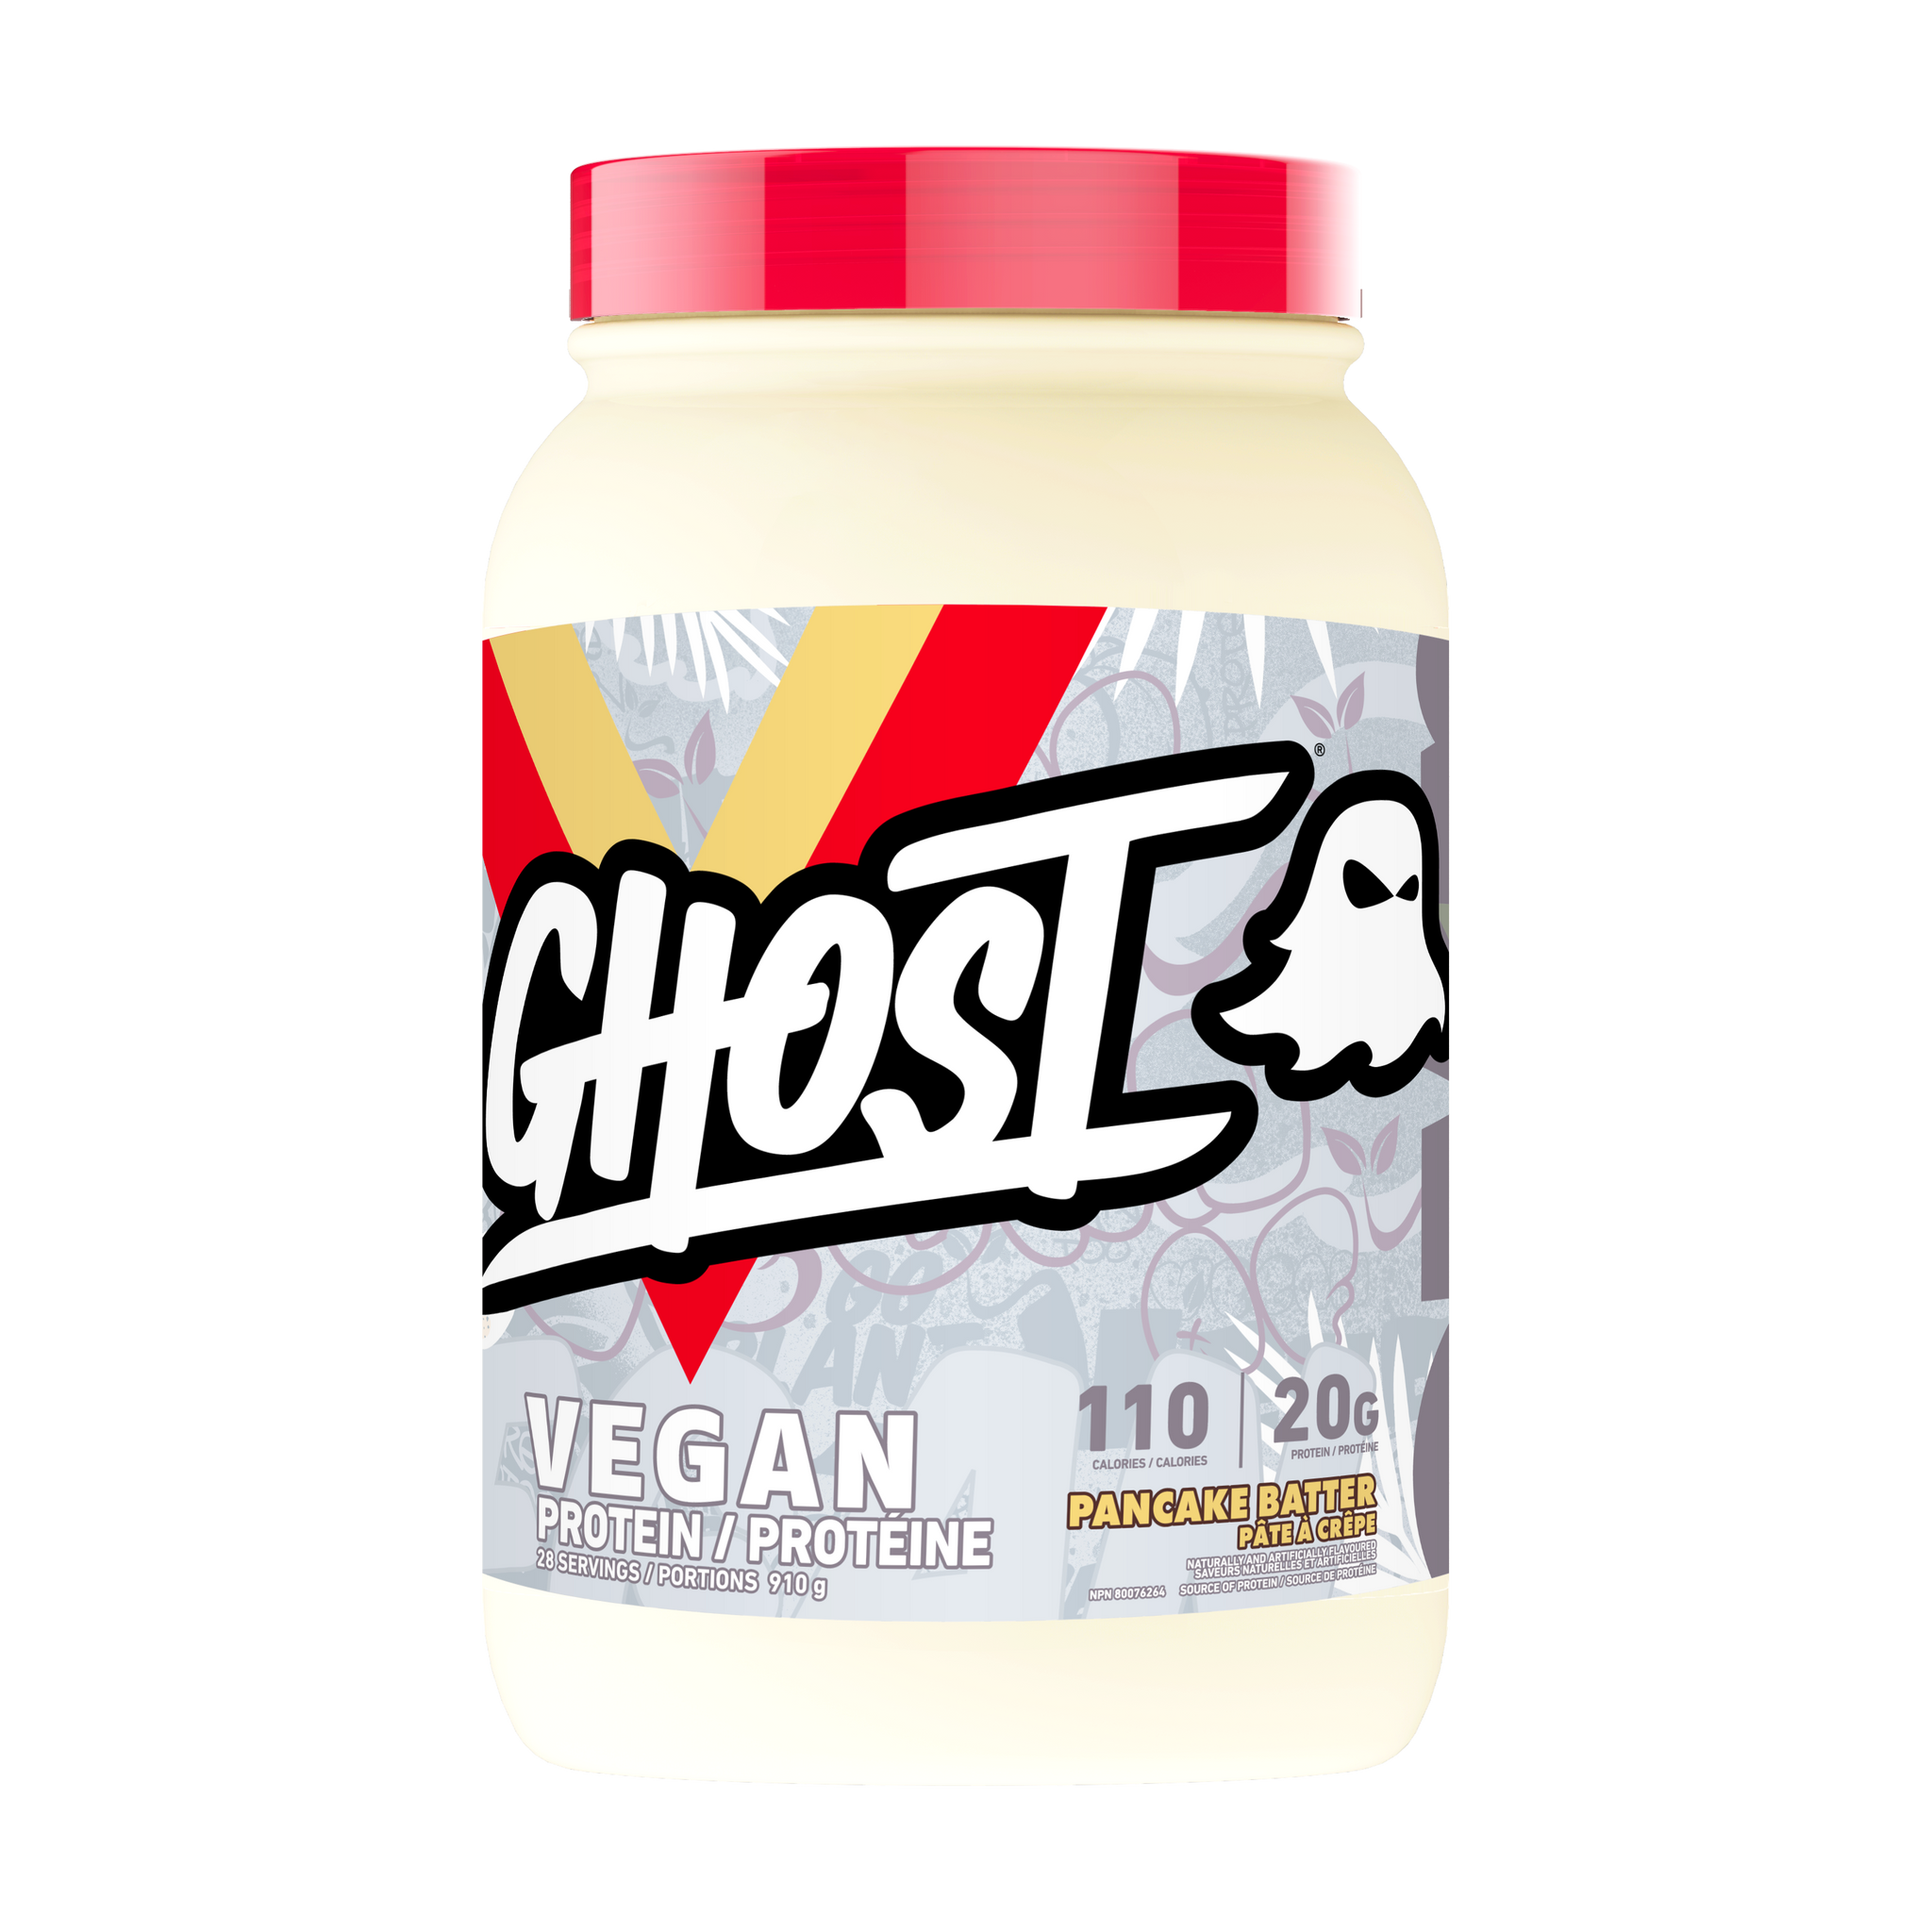 Ghost Vegan Protein Pancake Batter / 28 Servings